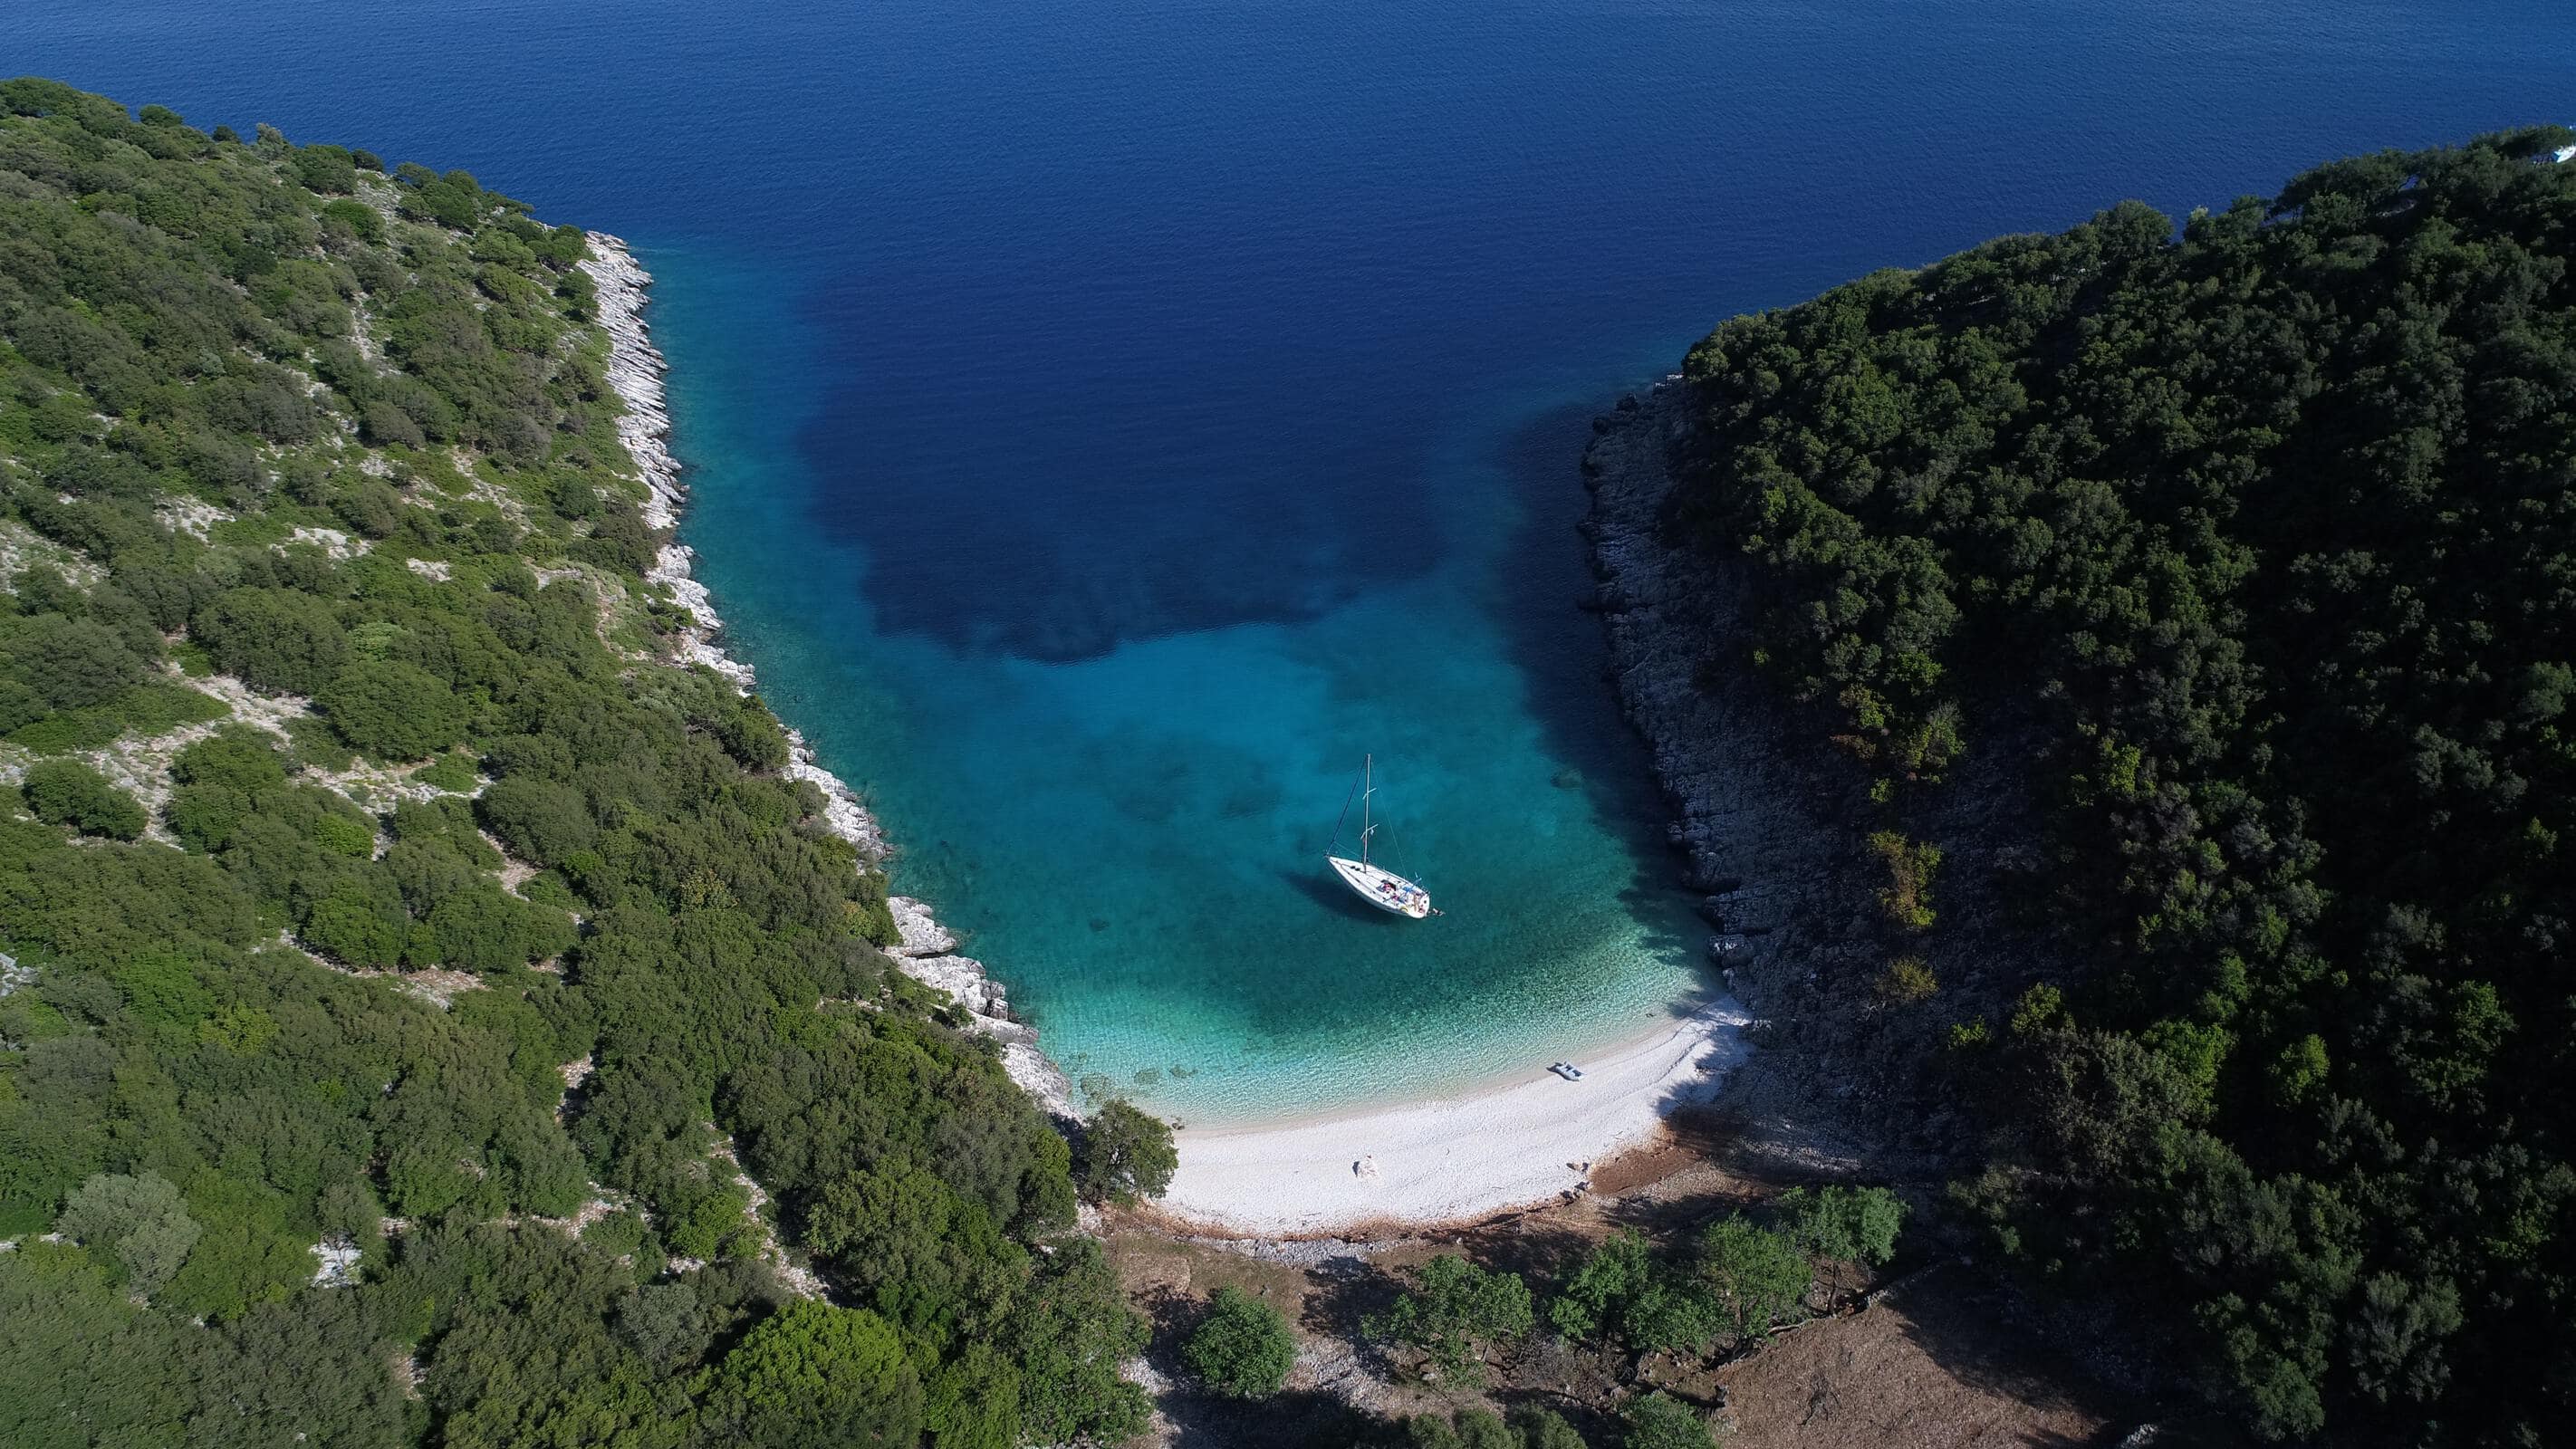 Filming in the Greek Islands